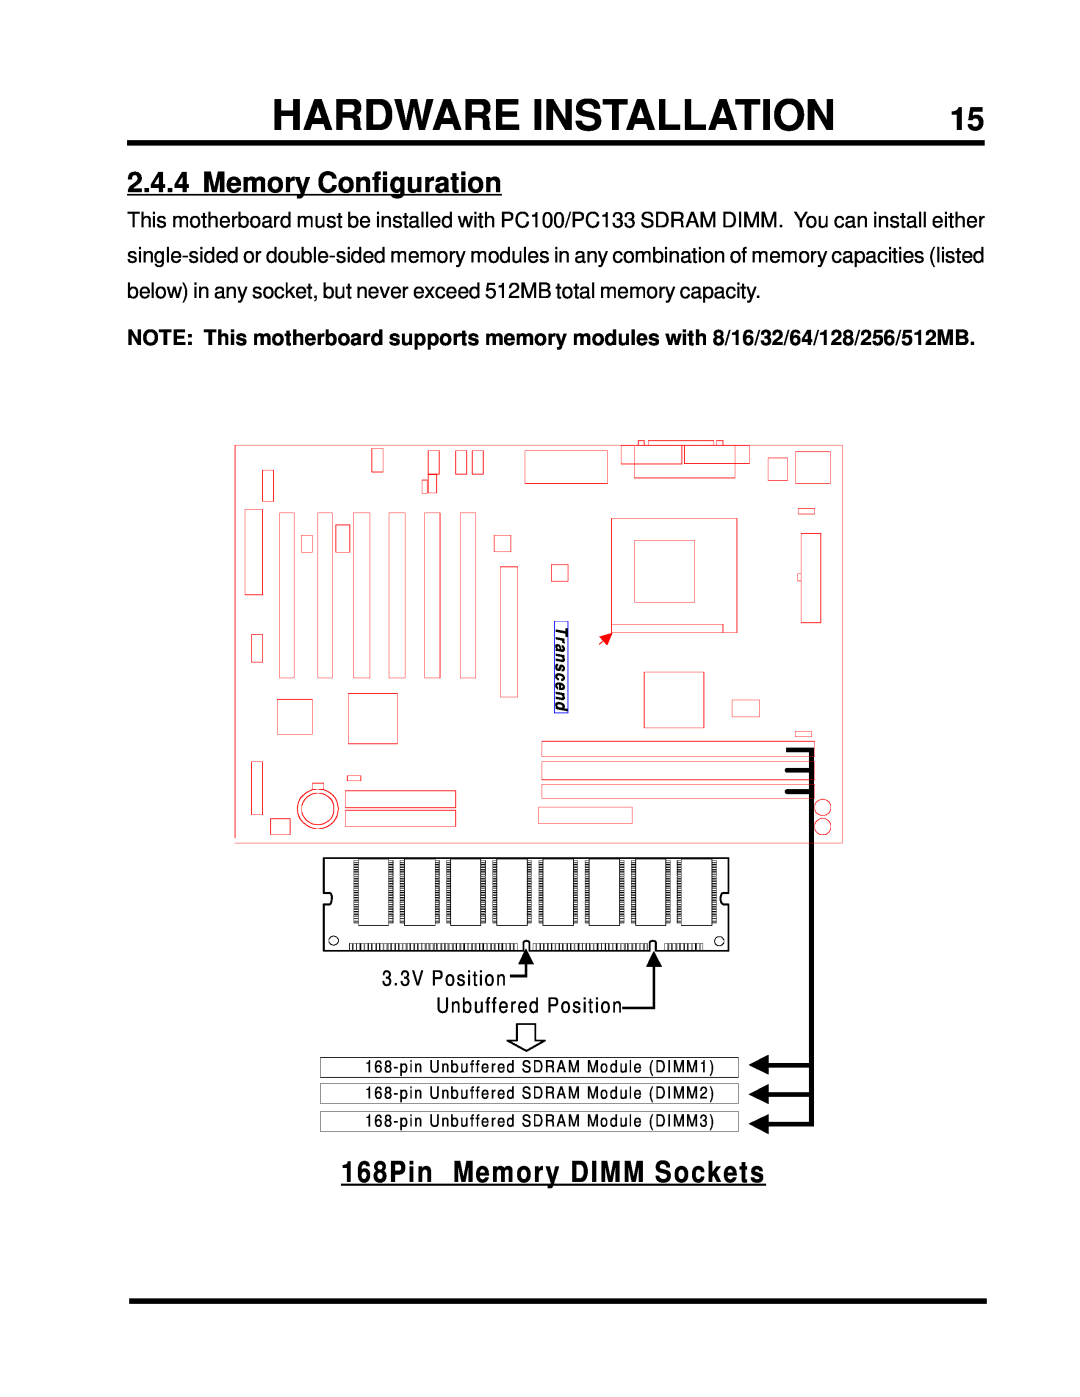 Intel TS-ASP3 user manual Memory Configuration, Hardware Installation, 168Pin Memory DIMM Sockets 